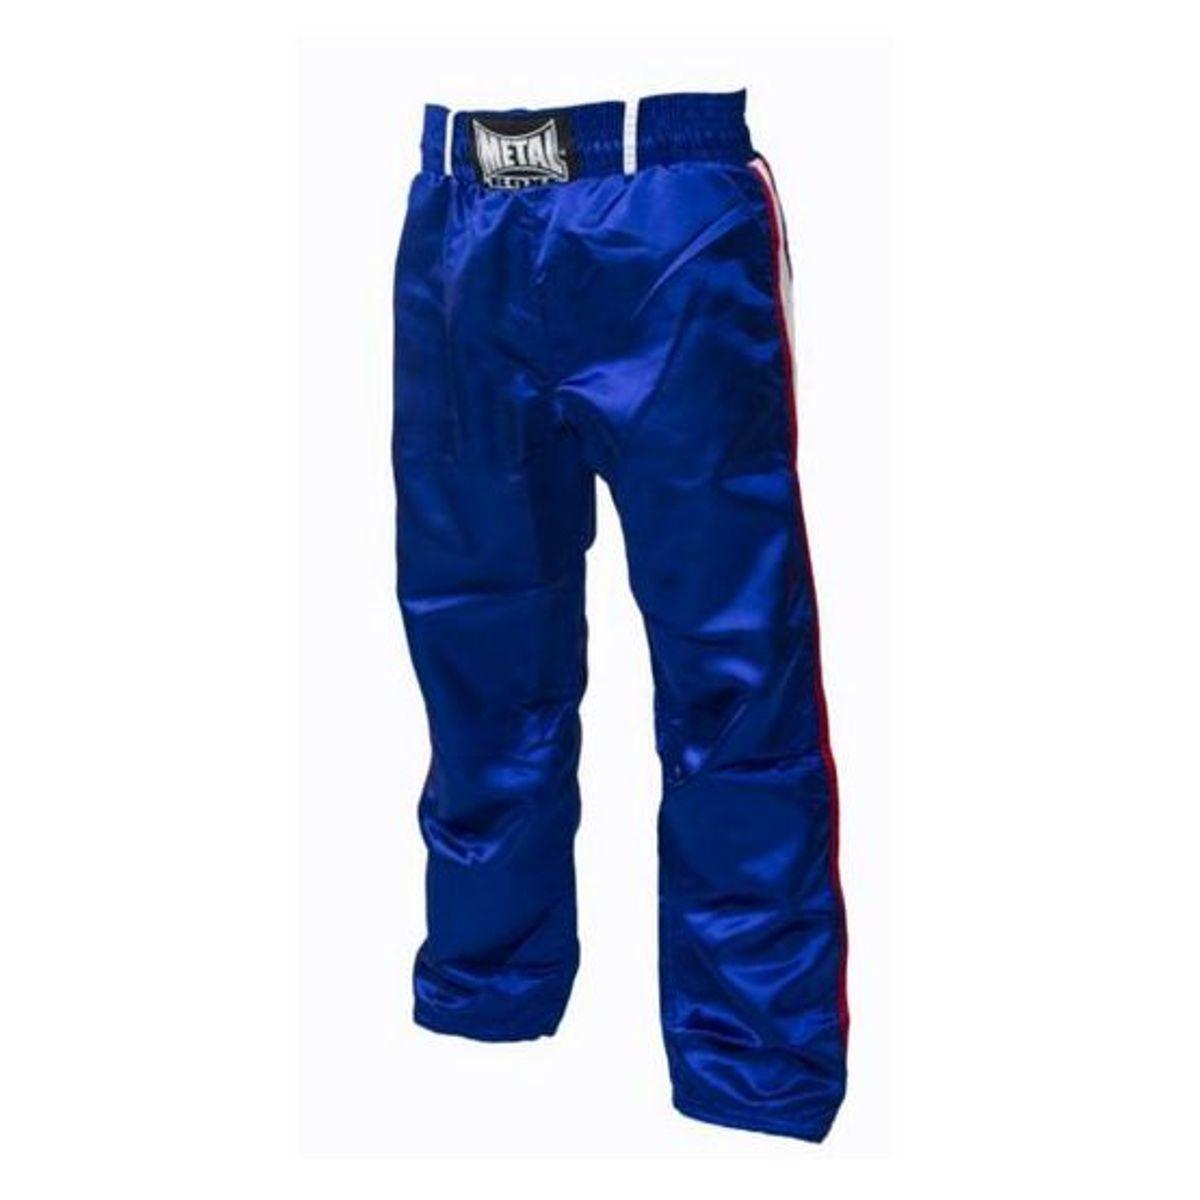 Pantalon de Full Contact Metal Boxe Bleu